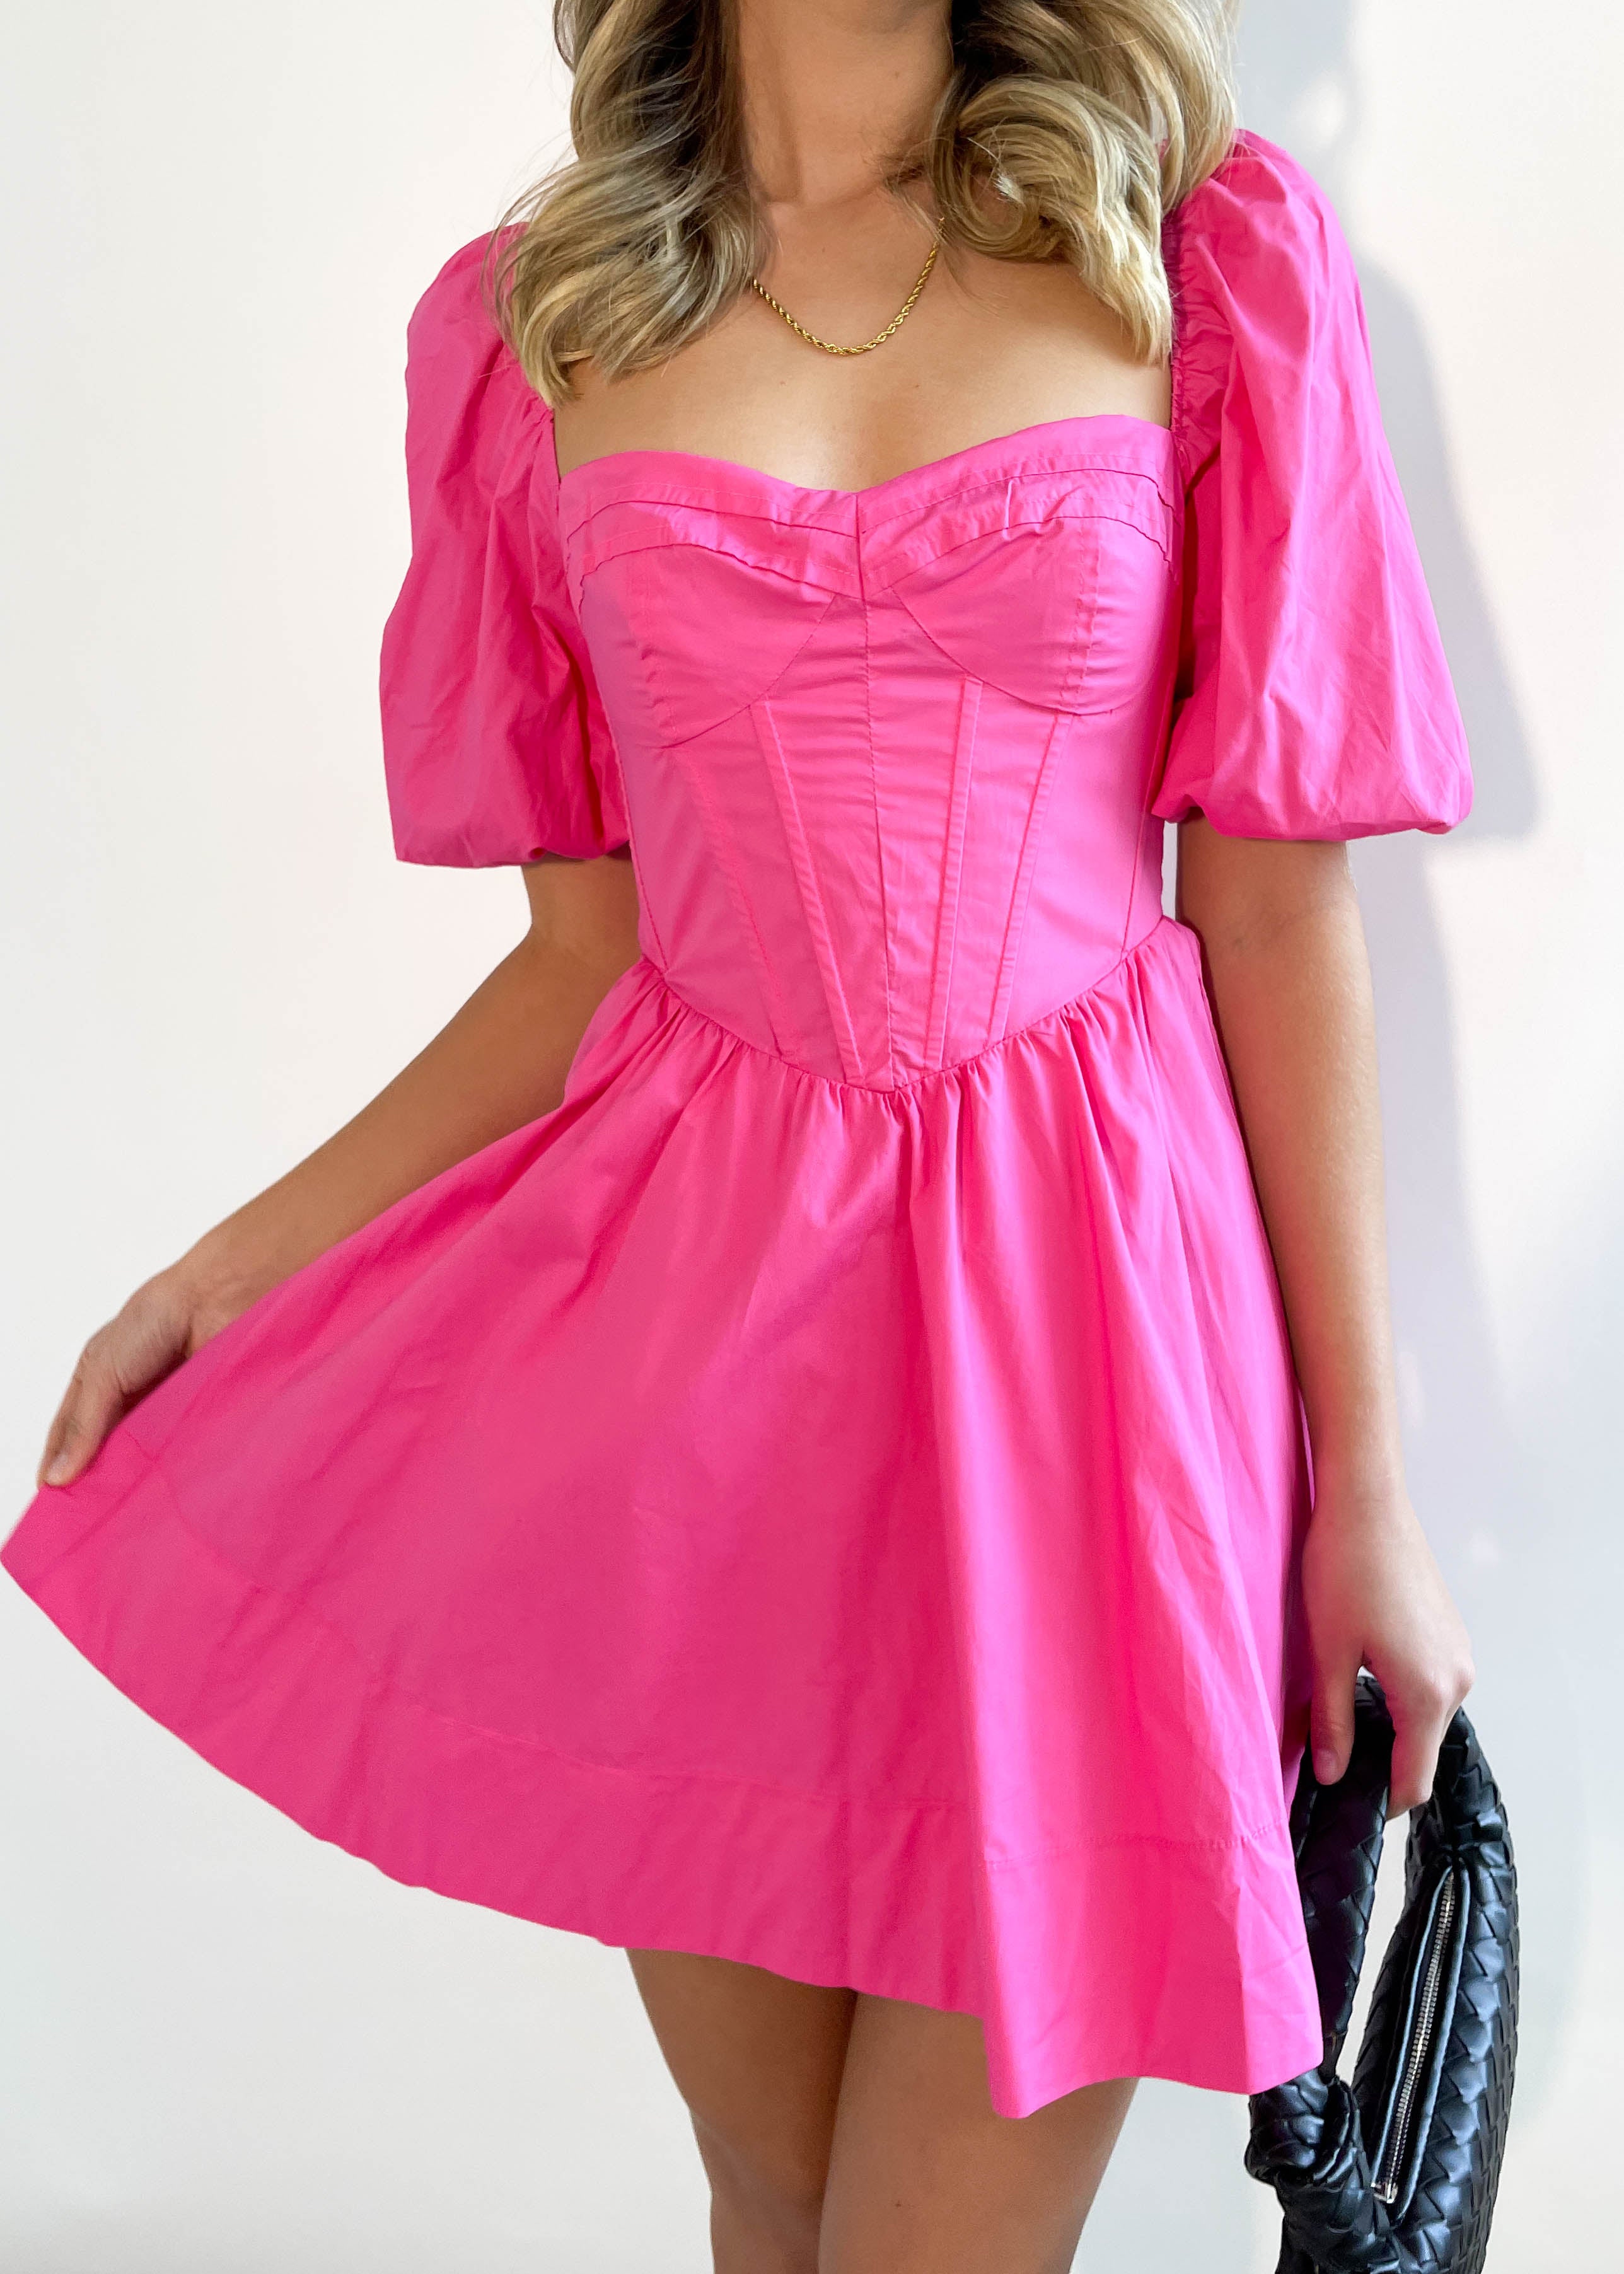 Asher Dress - Hot Pink